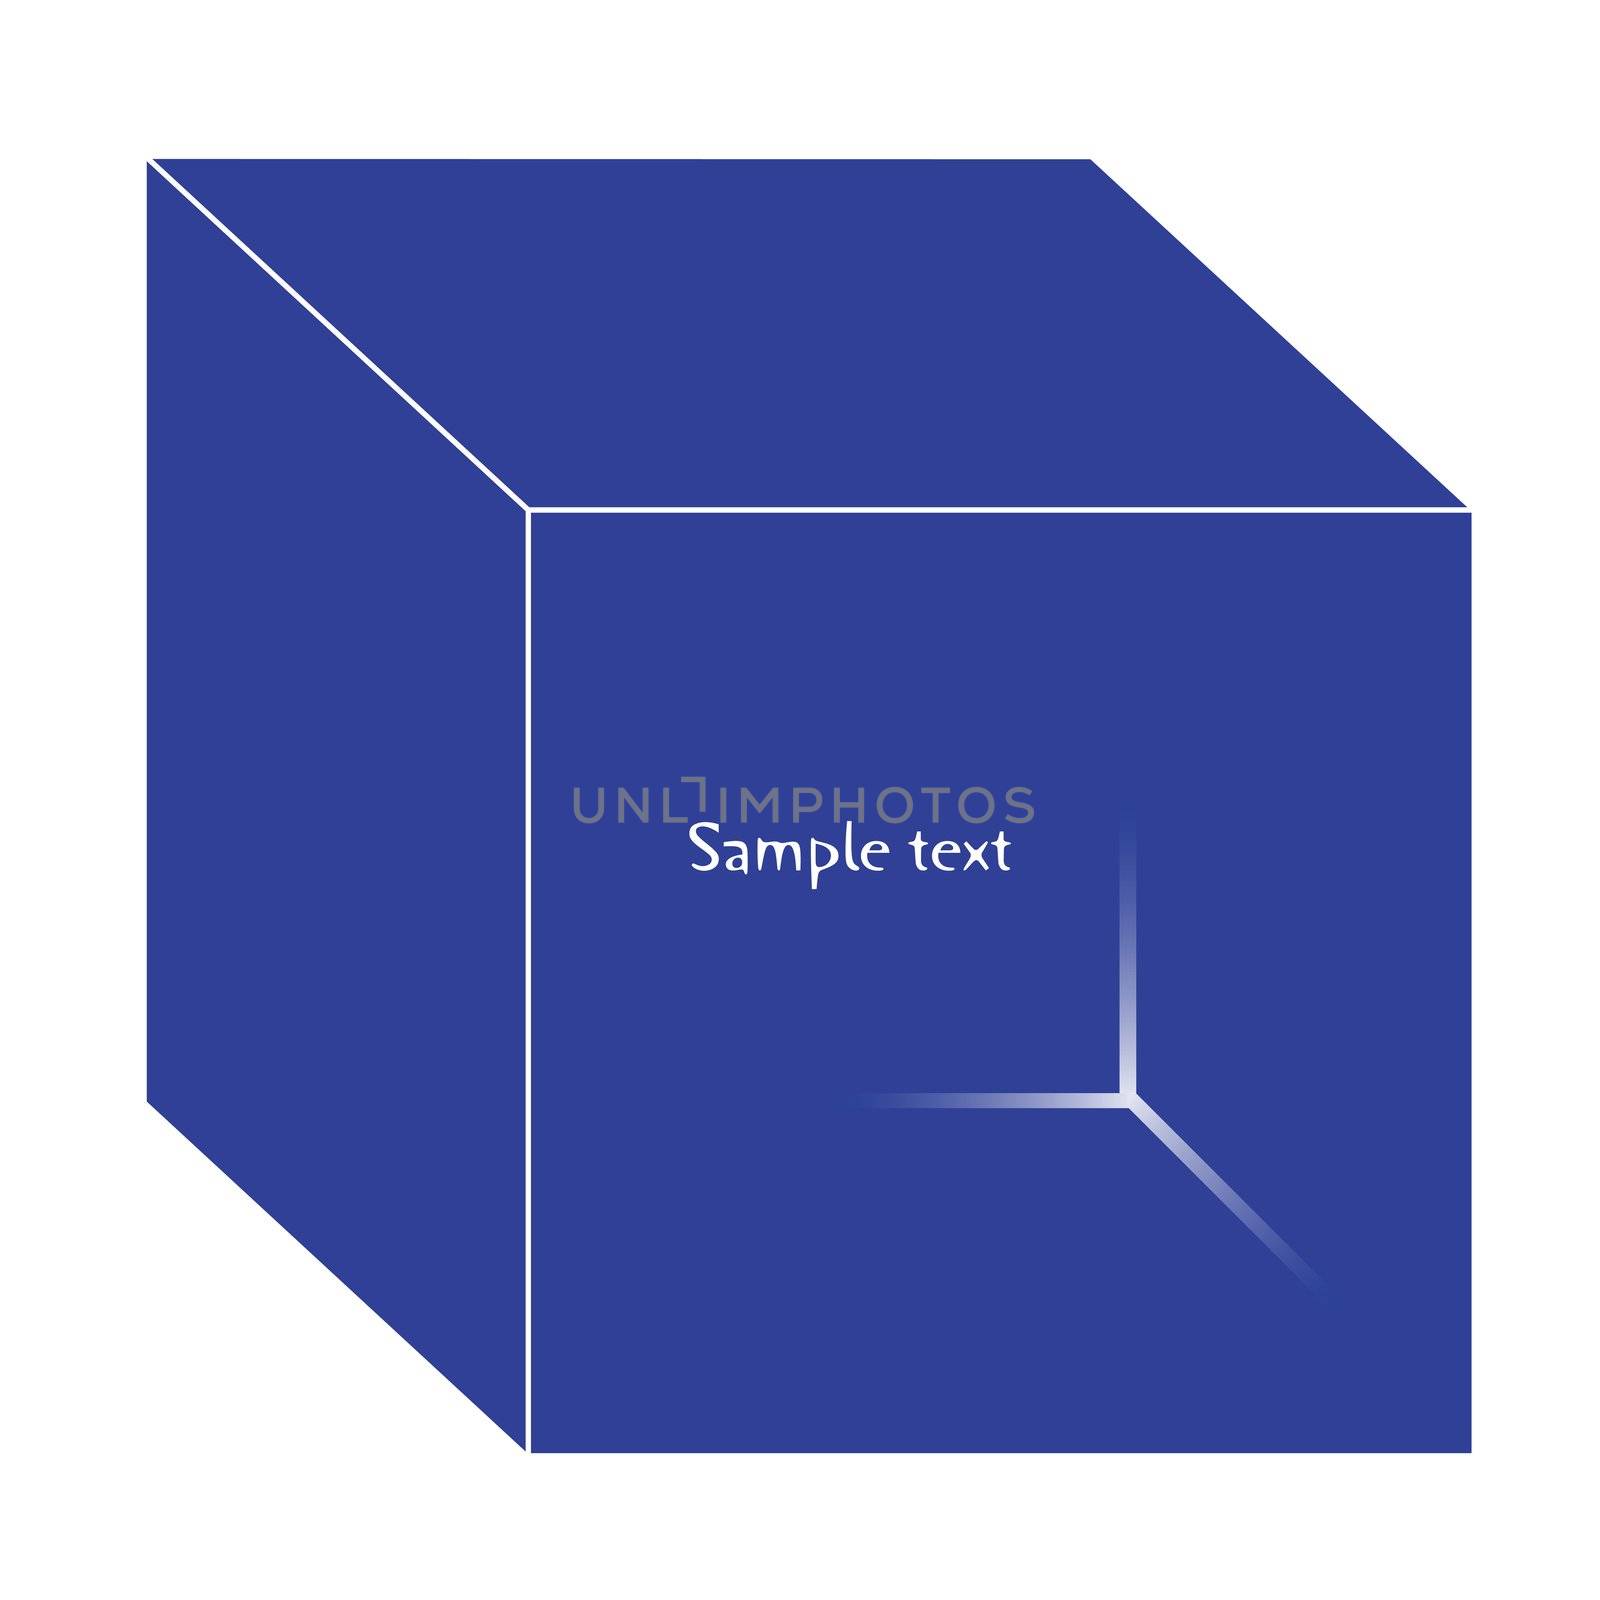 cube by robertosch